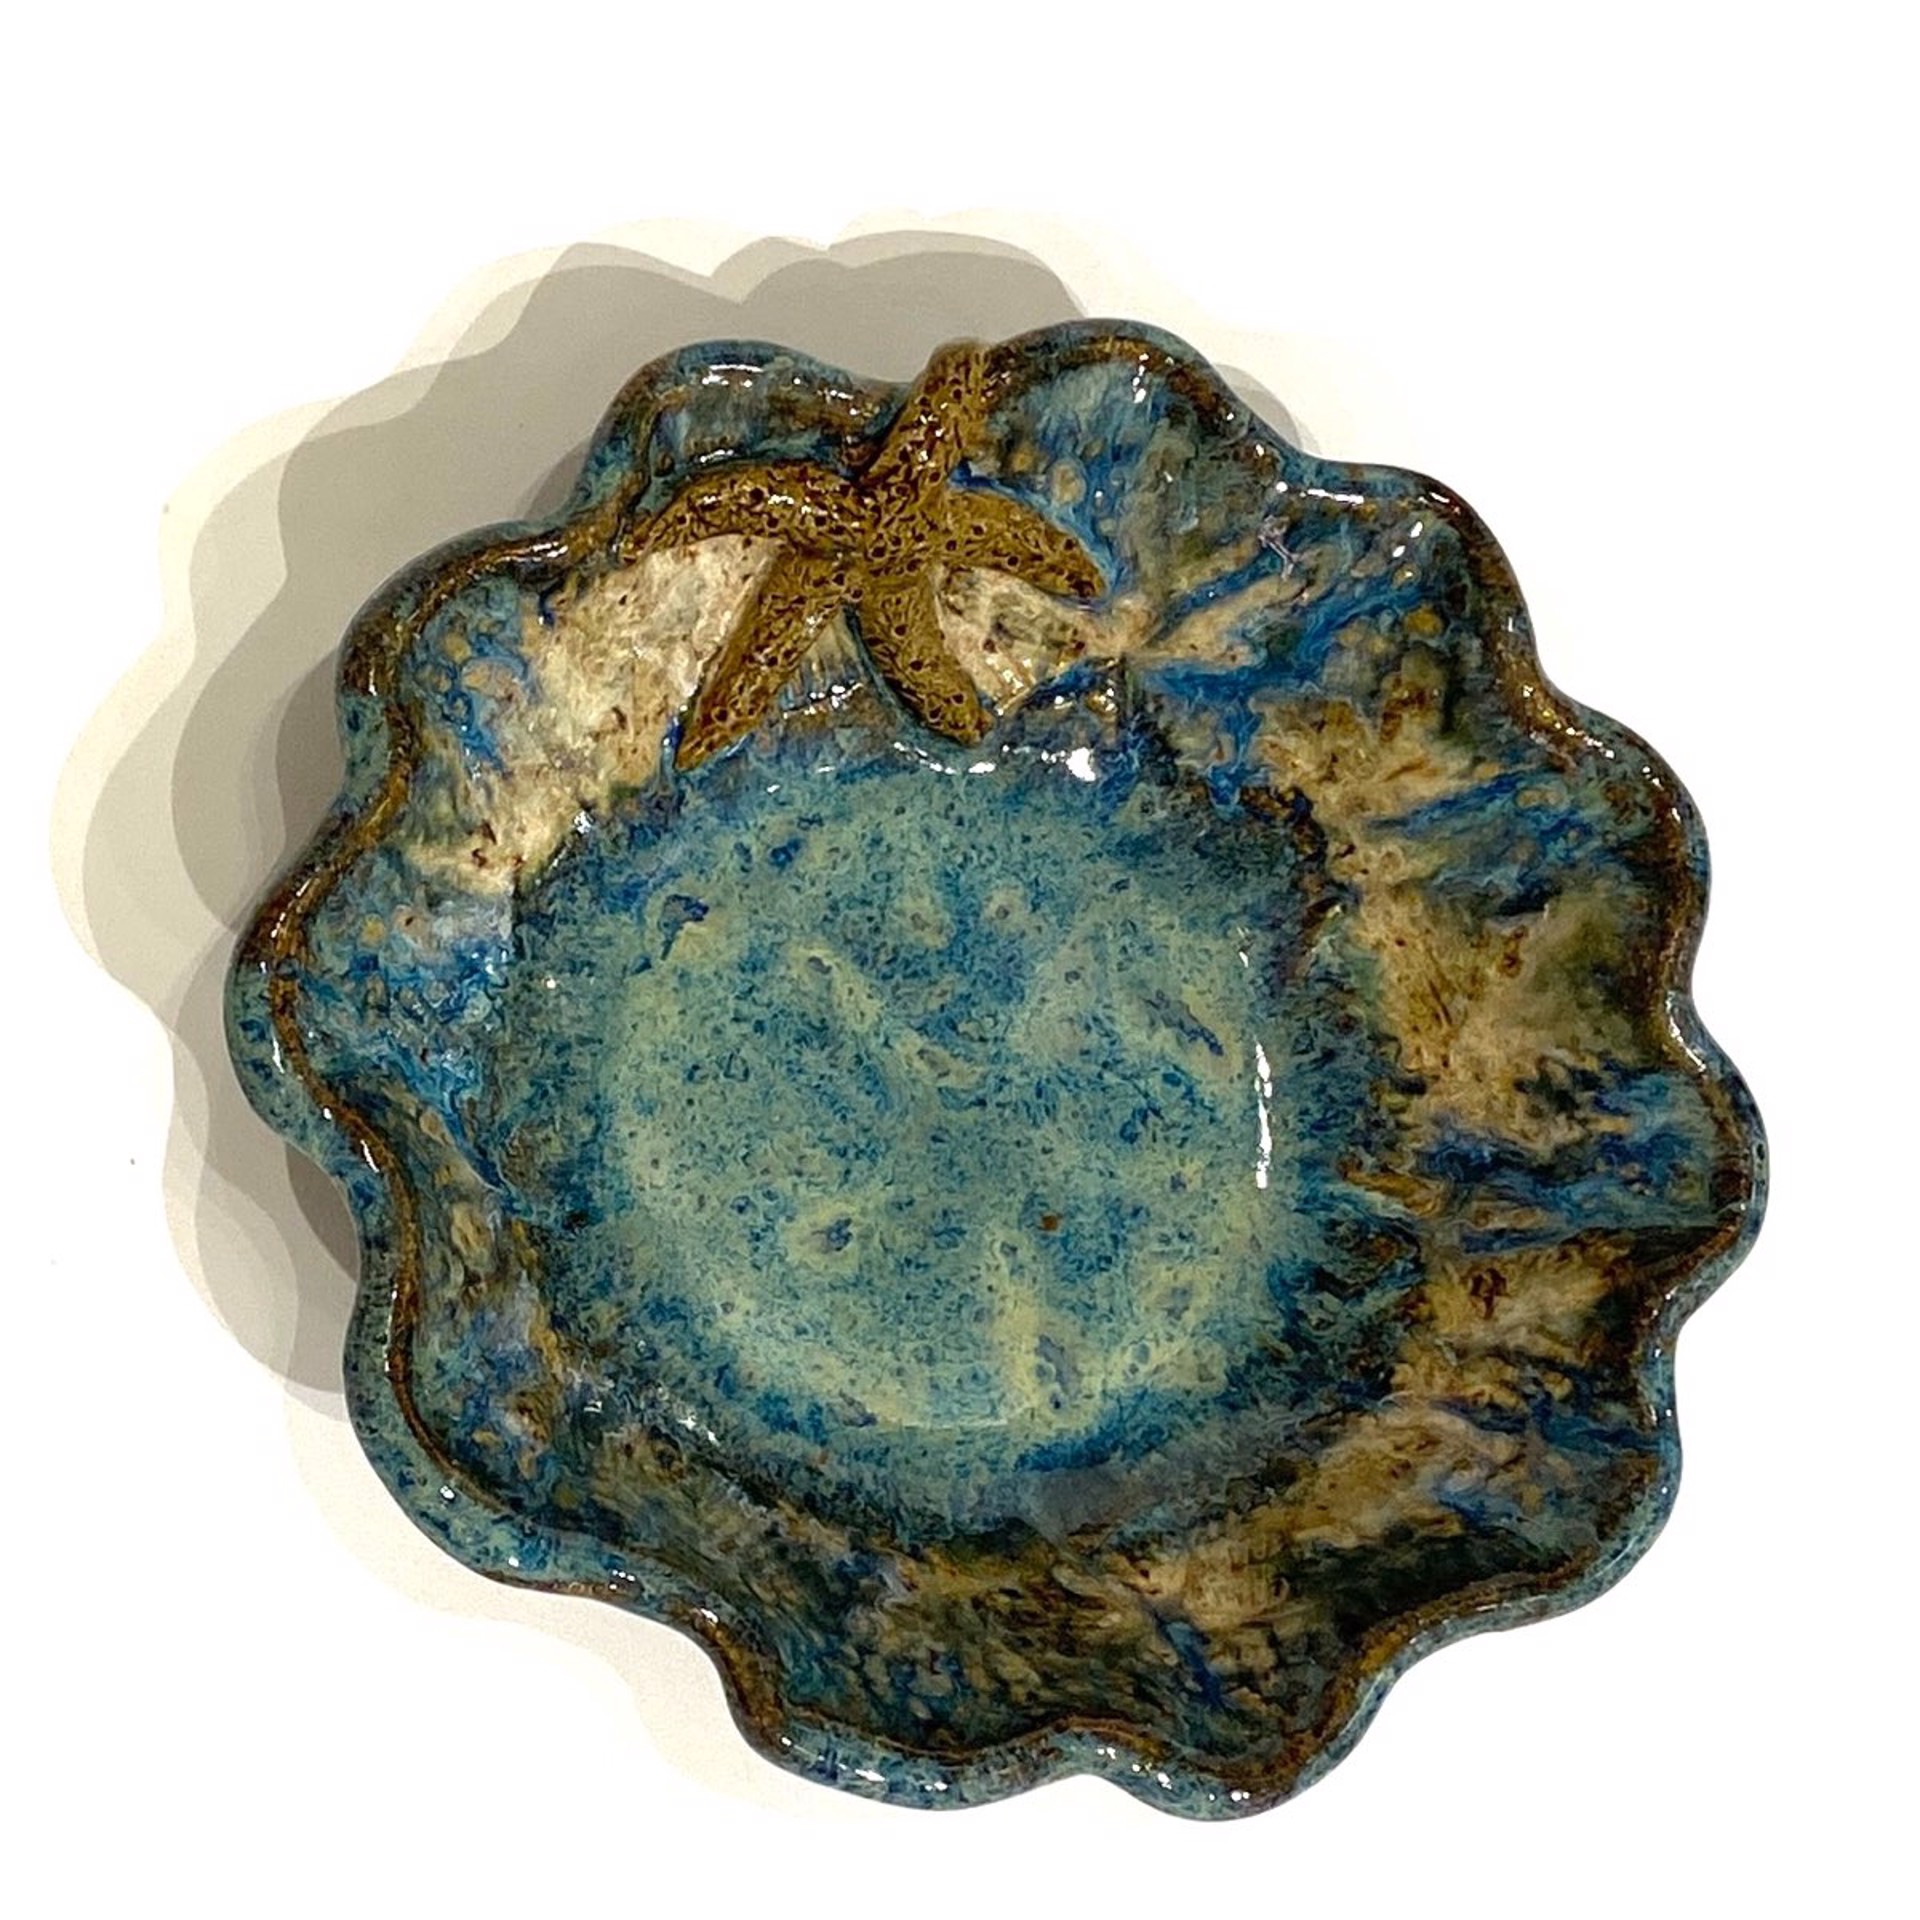 Small Round Scalloped Bowl with Starfish (Blue Glaze) LG23-1166 by Jim & Steffi Logan